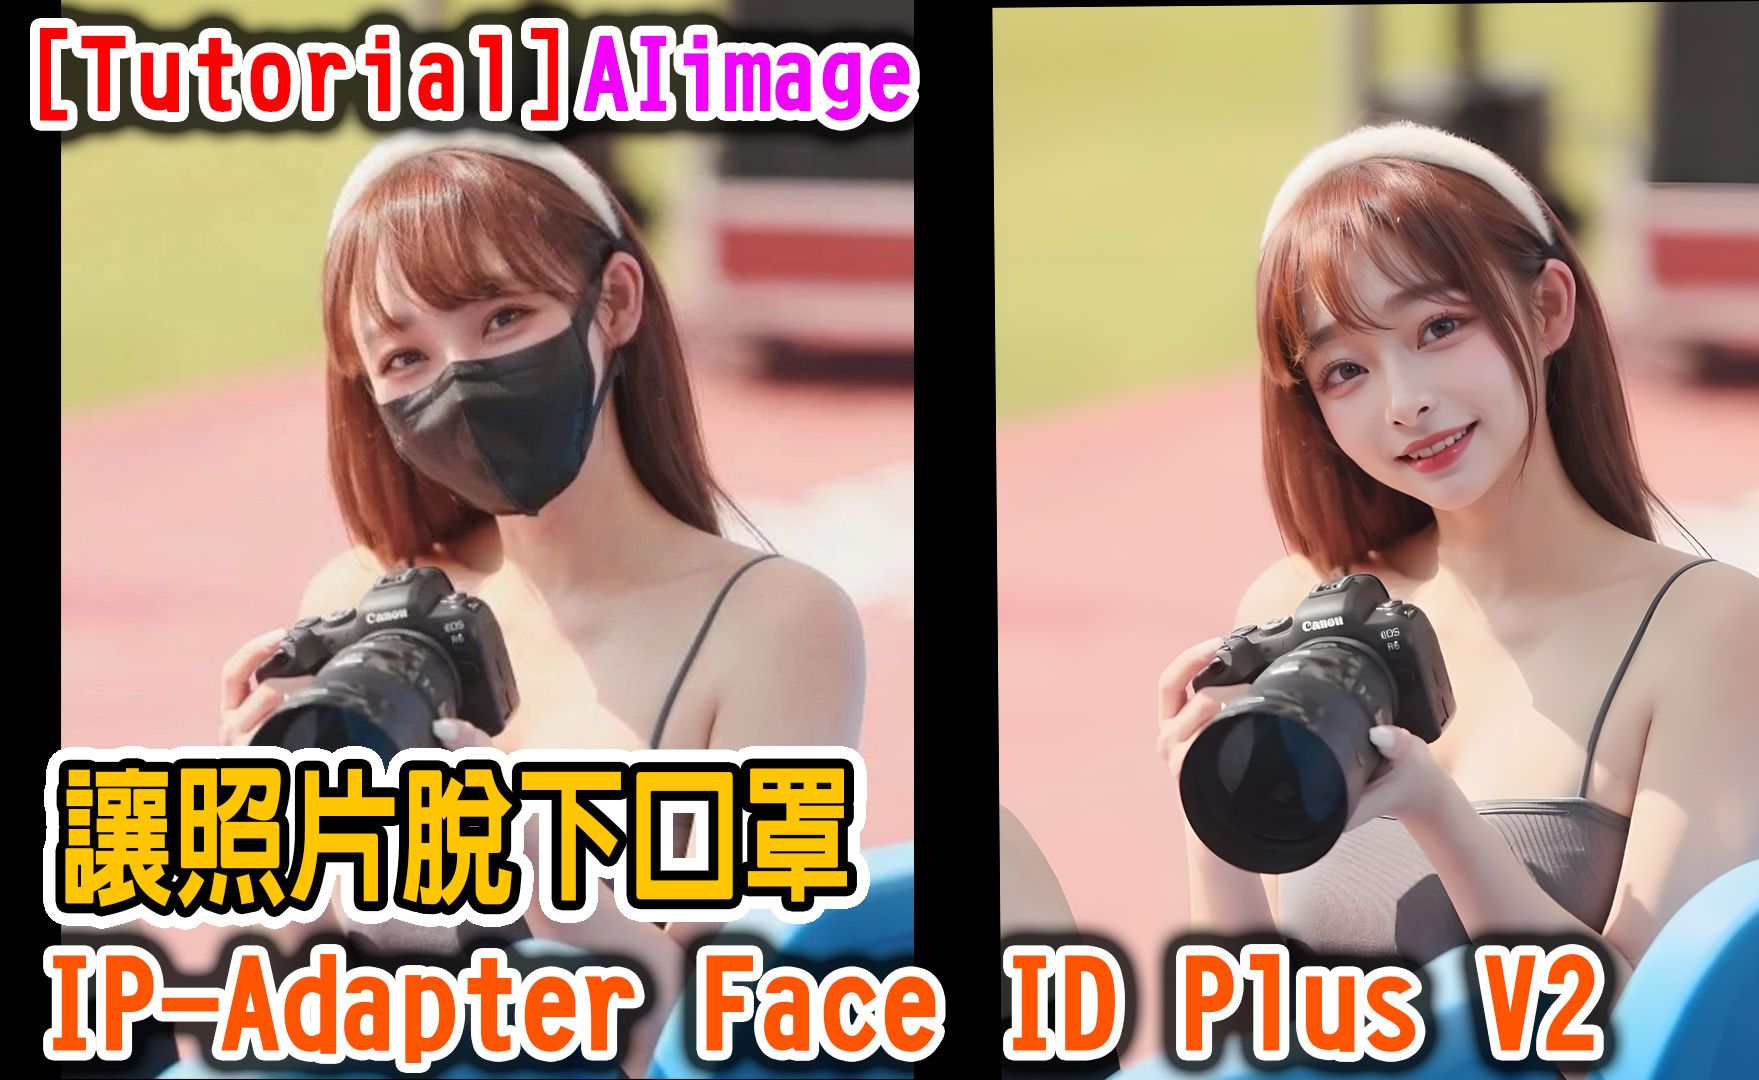 [AI tutorial] 讓照片脫下口罩 | ControlNet | IP-Adapter Face ID Plus V2 | DW openpose